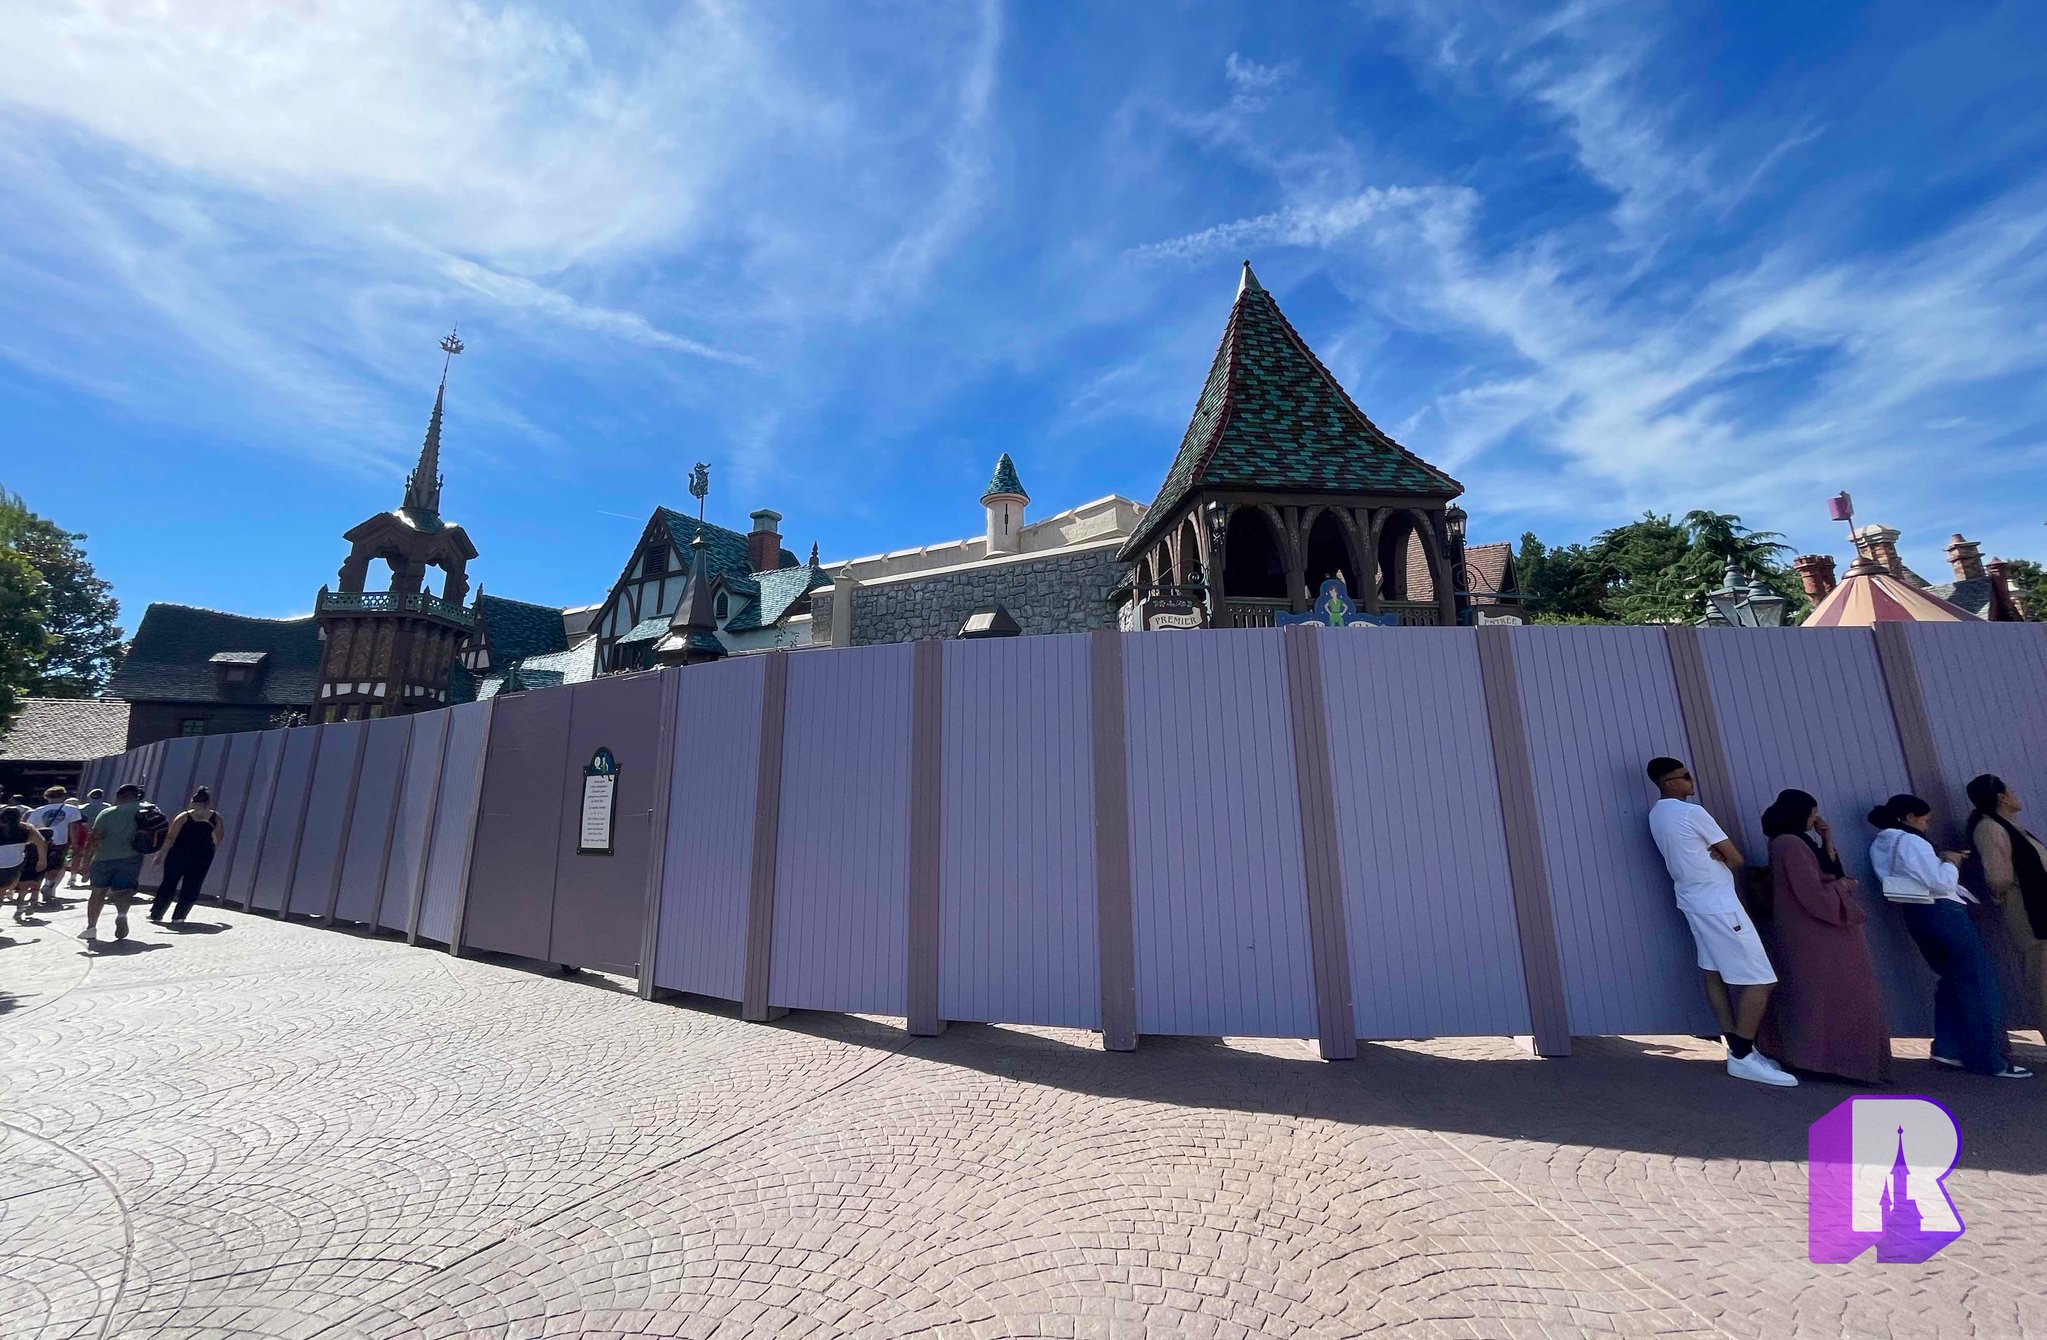 FRANCE – AN ENDLESS SOURCE OF INSPIRATION FOR DISNEY AND DISNEYLAND PARIS -  DisneylandParis News